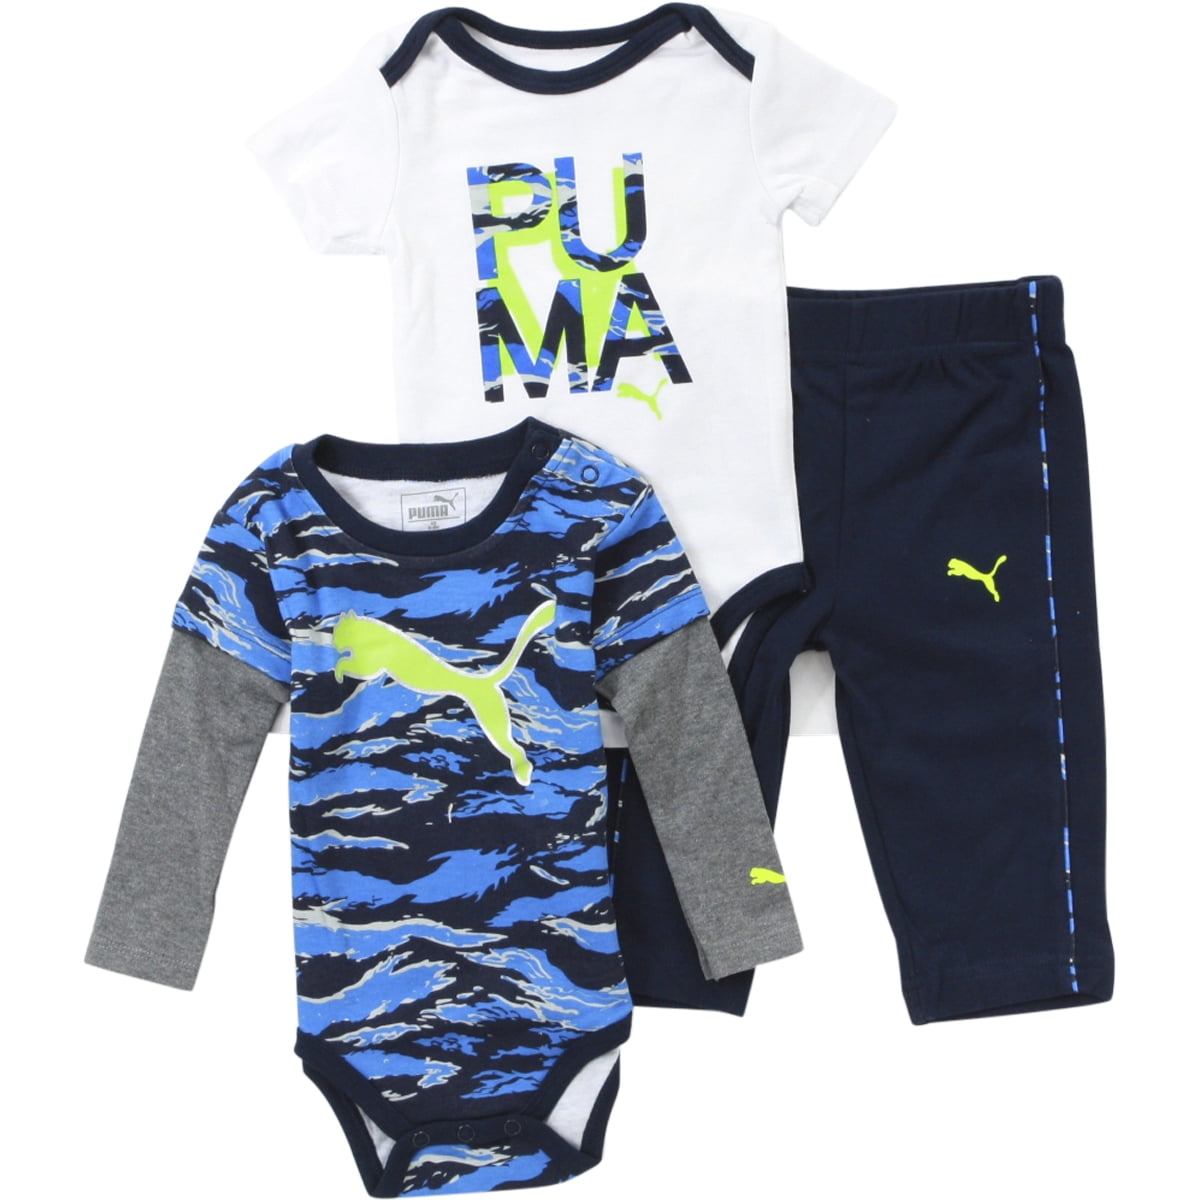 puma baby clothing